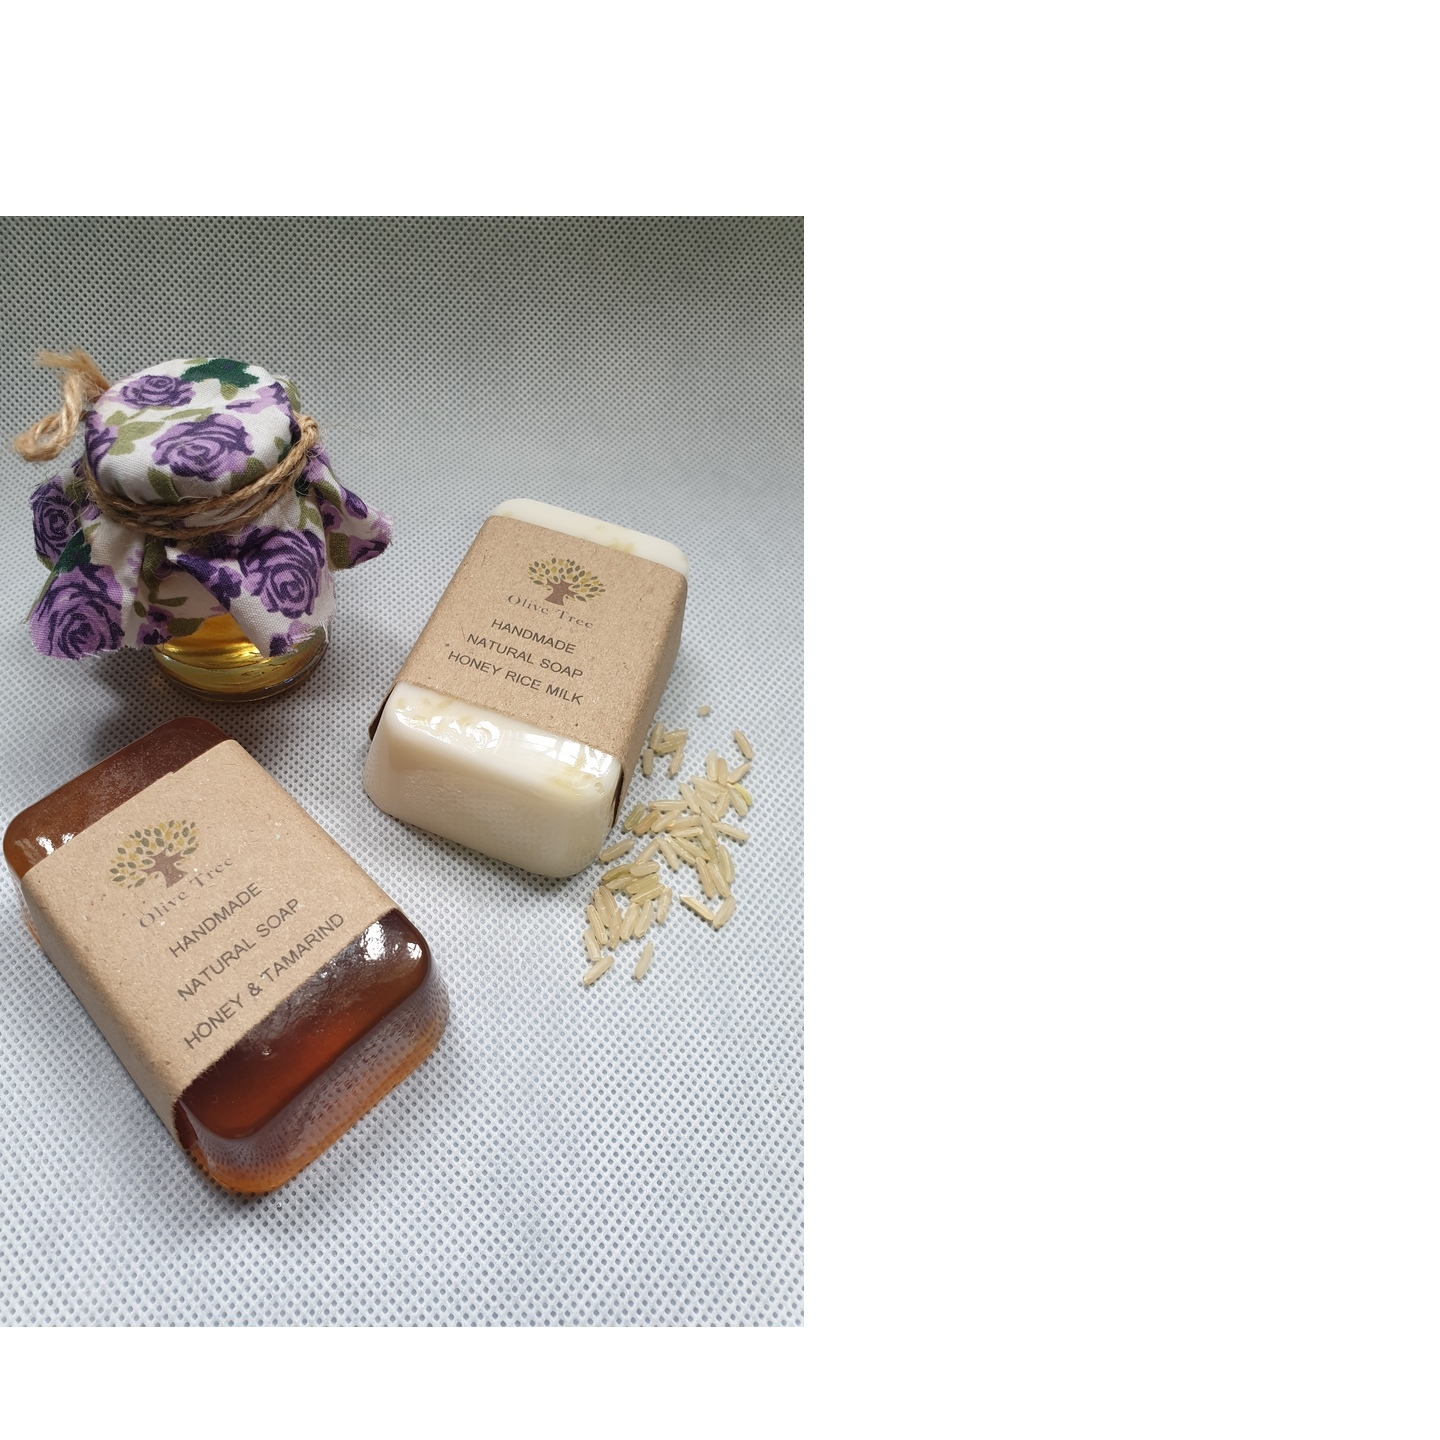 Olive Tree Handmade Natural Soap - Rice Milk & Tamarind 2 pc pack